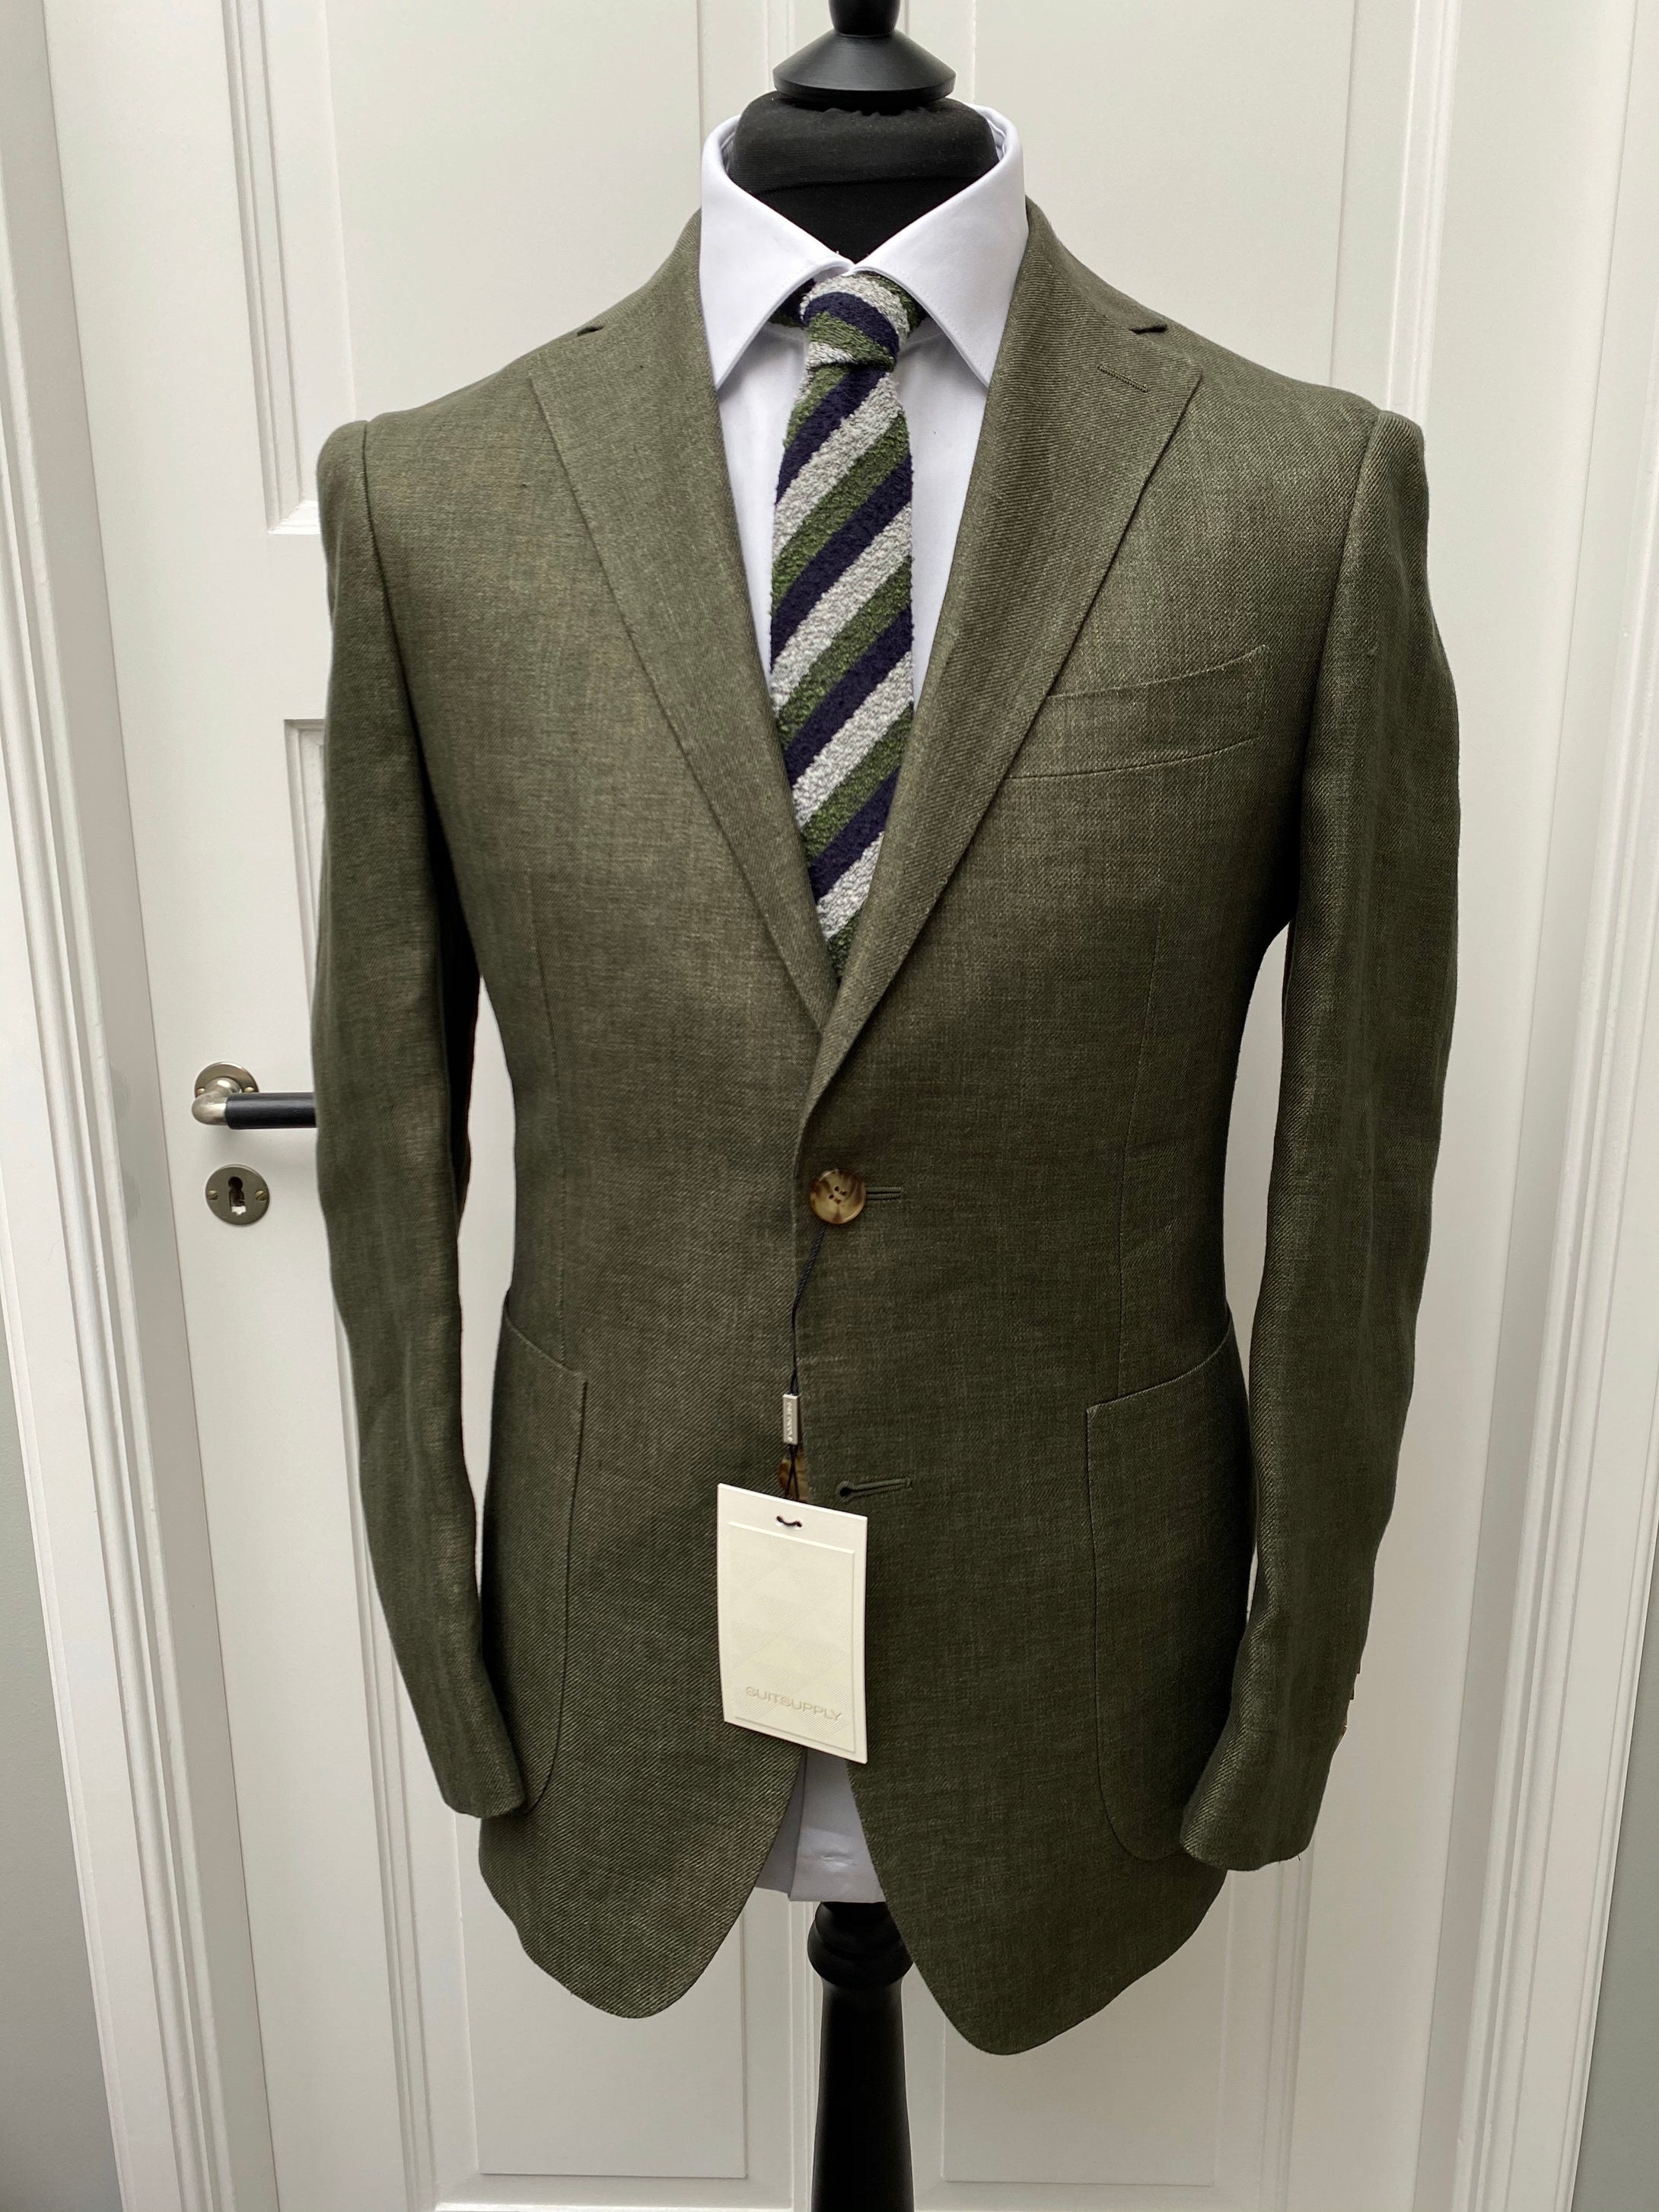 NWT Suitsupply Havana Green 100% Linen Suit - Size 40L